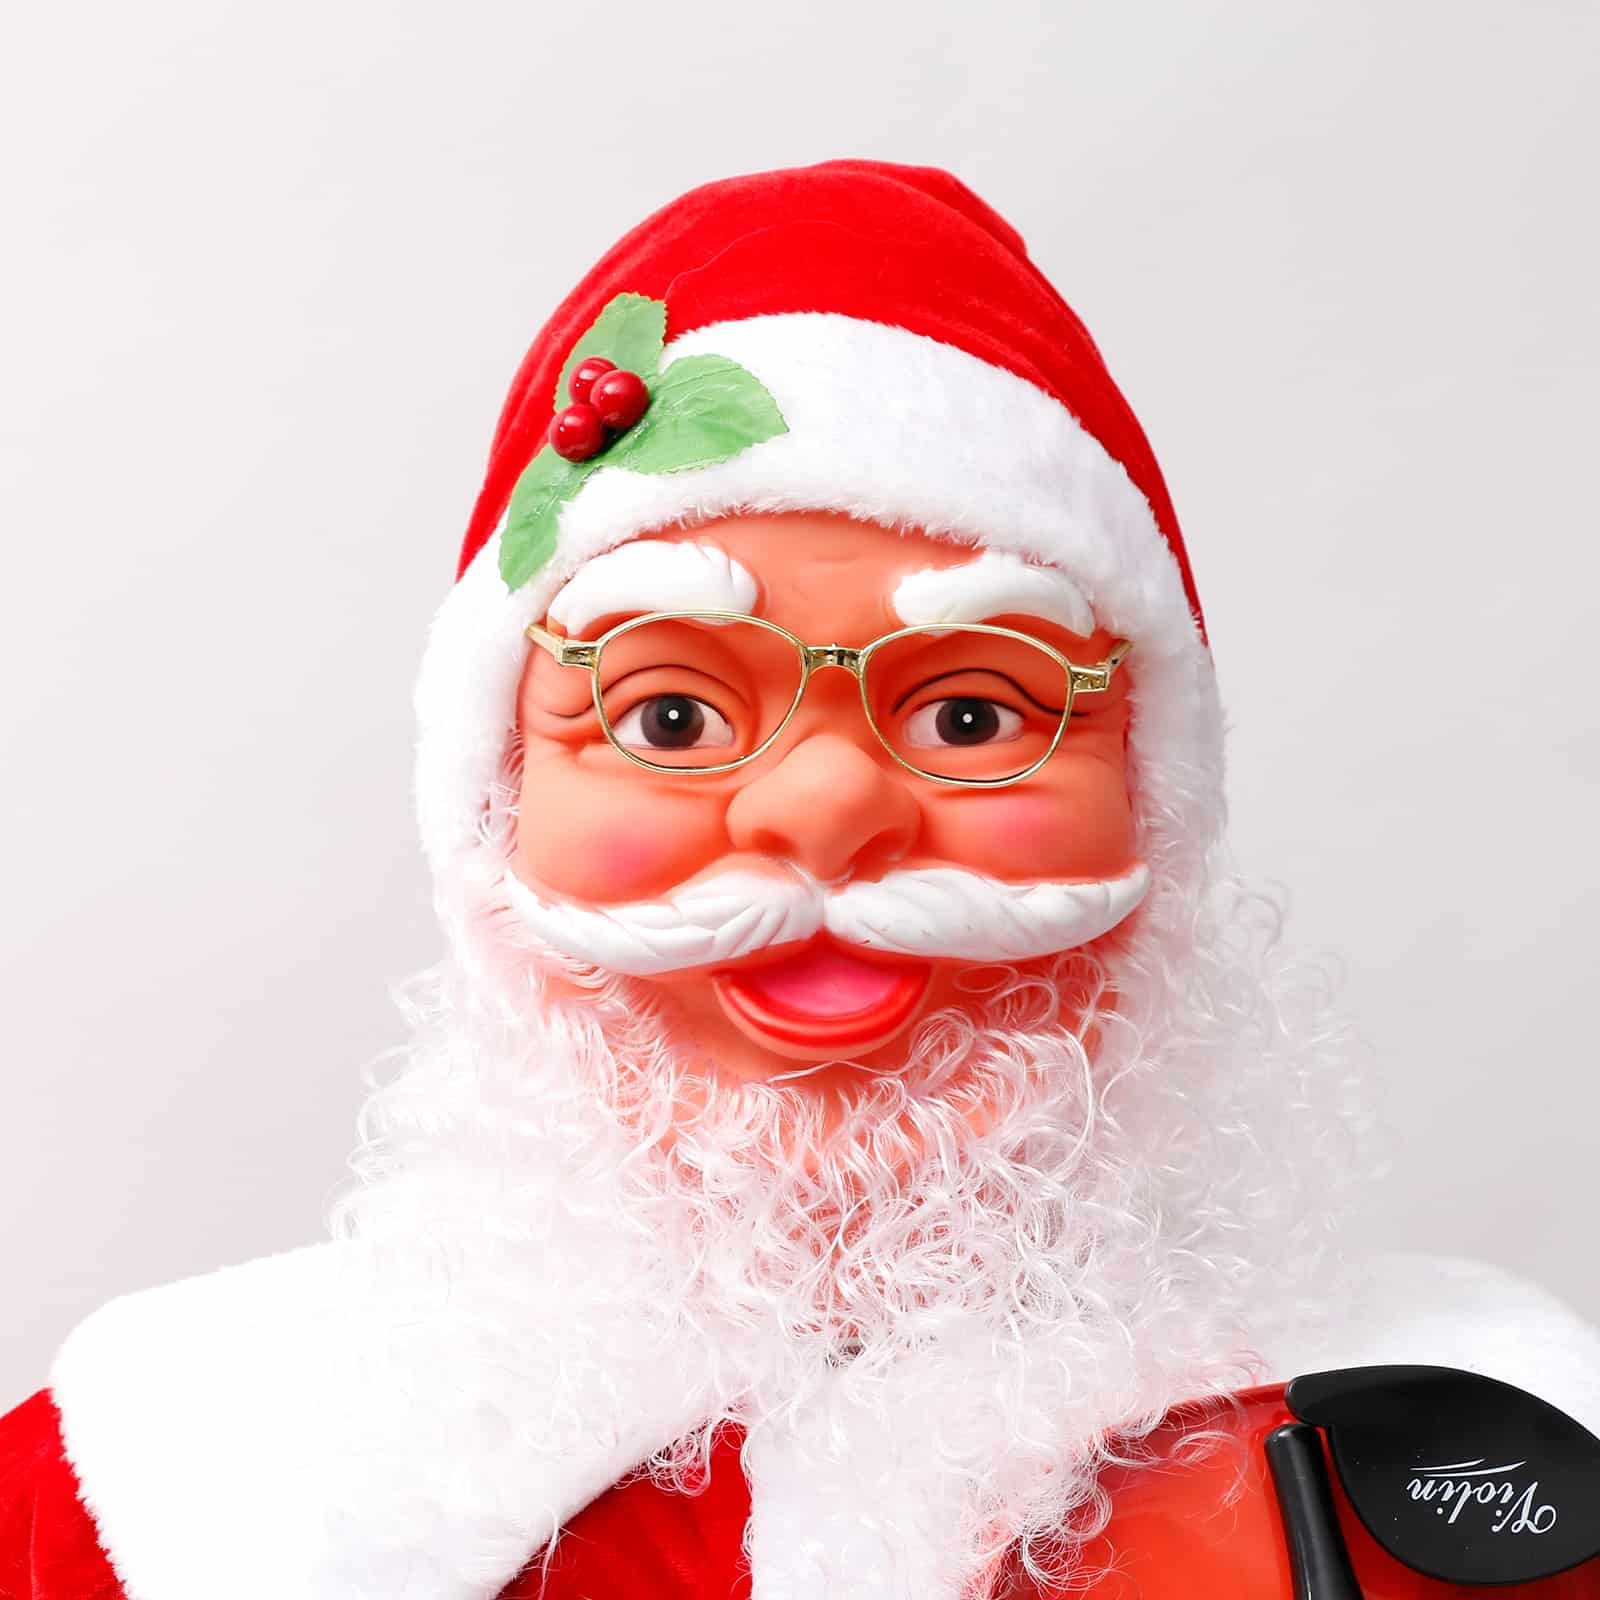 130cm Santa Claus Reading Gift List by Christmas Tree Skirt - 1